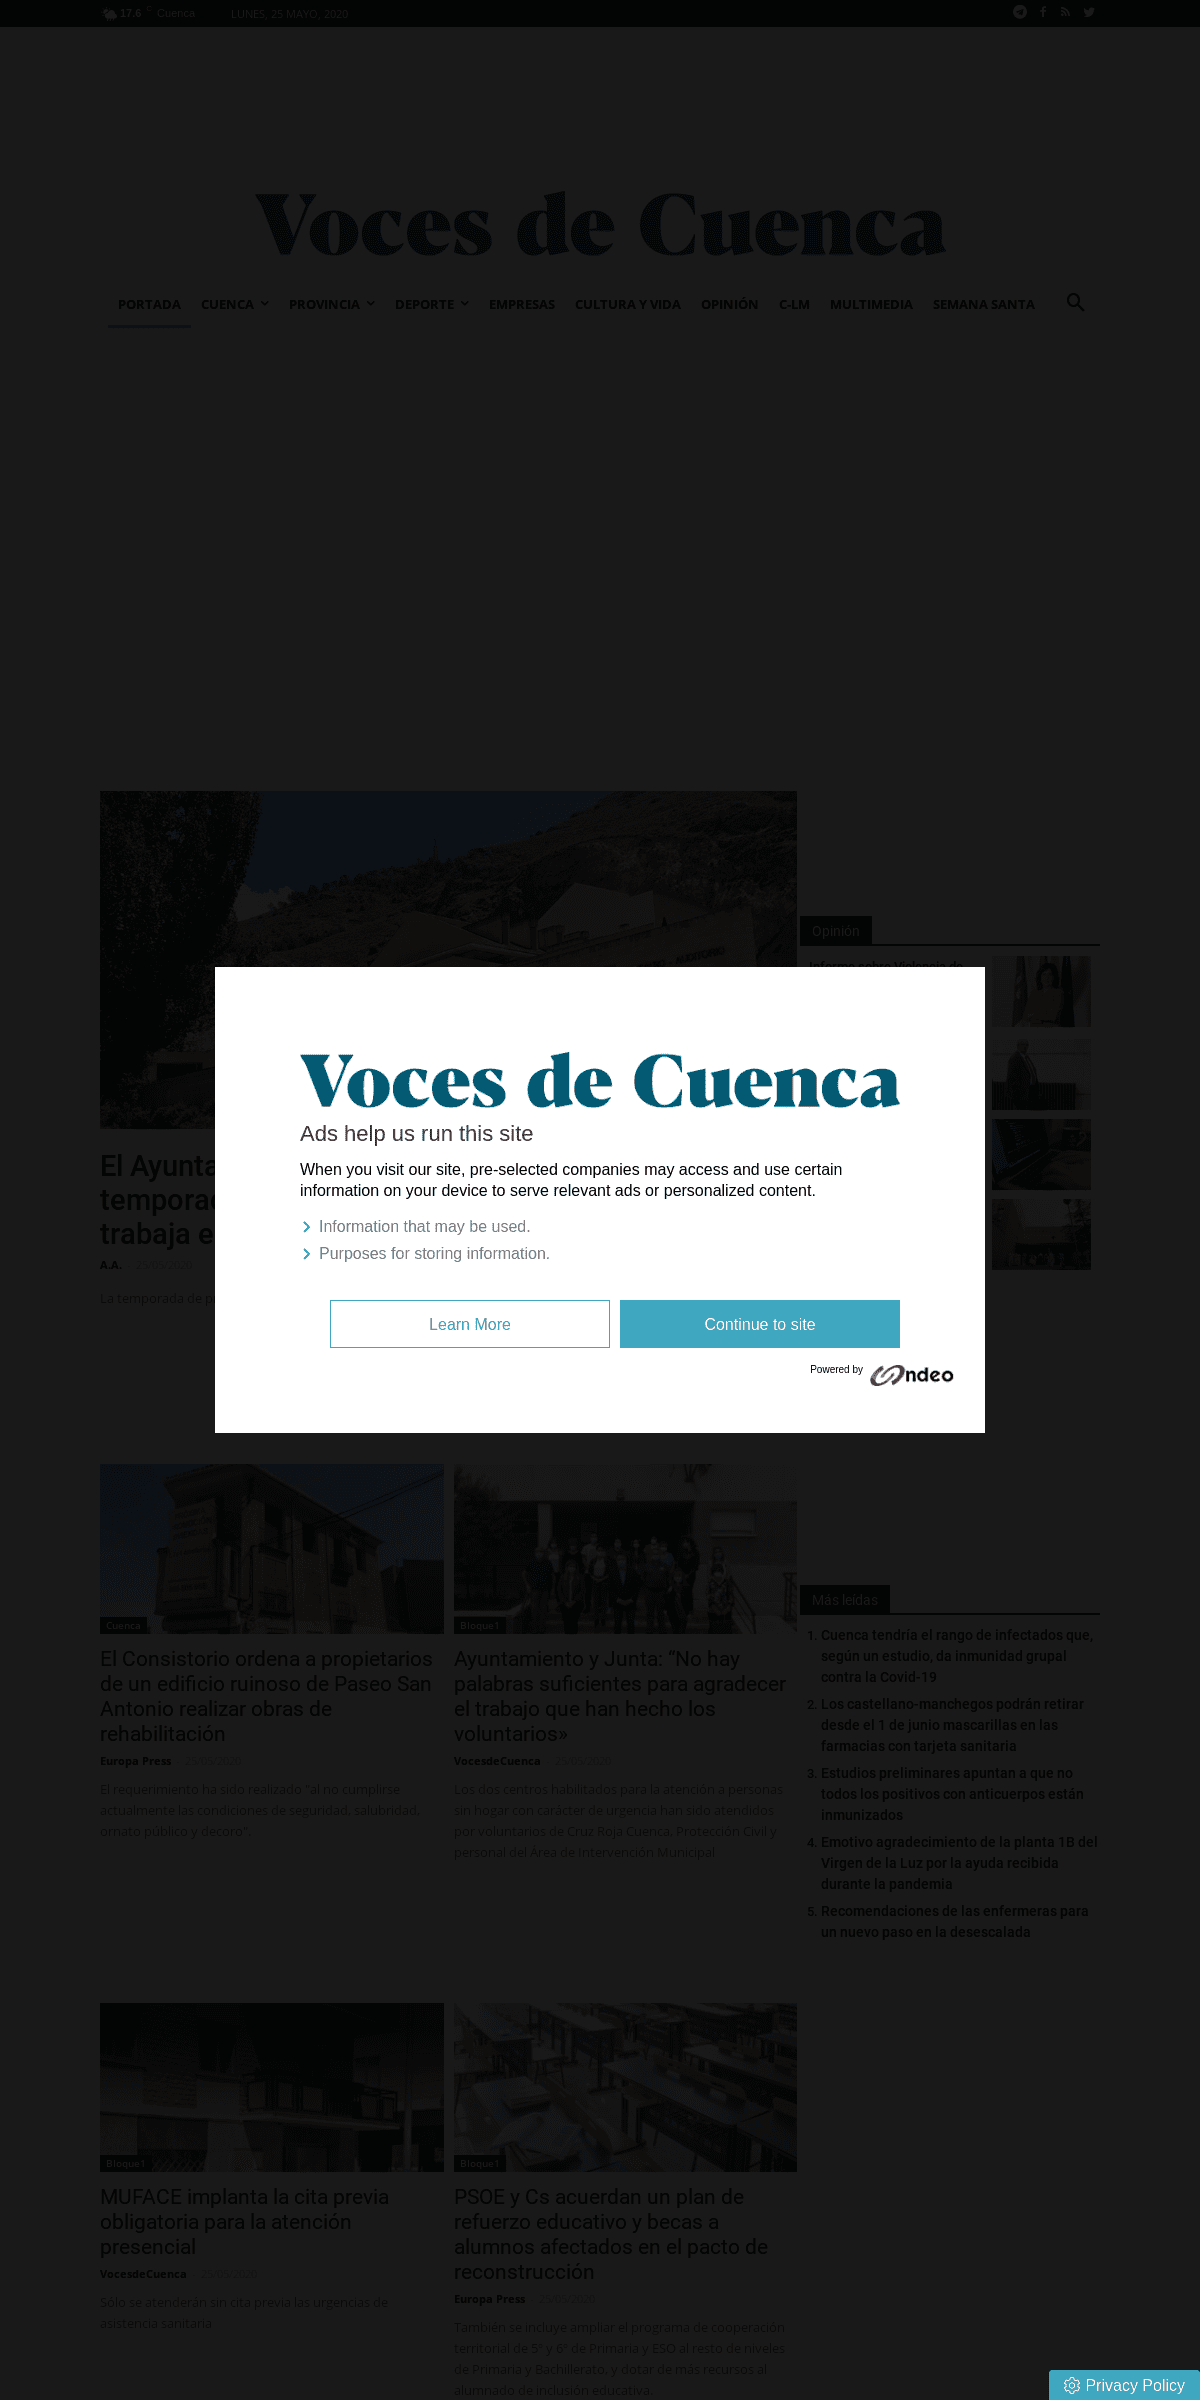 A complete backup of vocesdecuenca.com